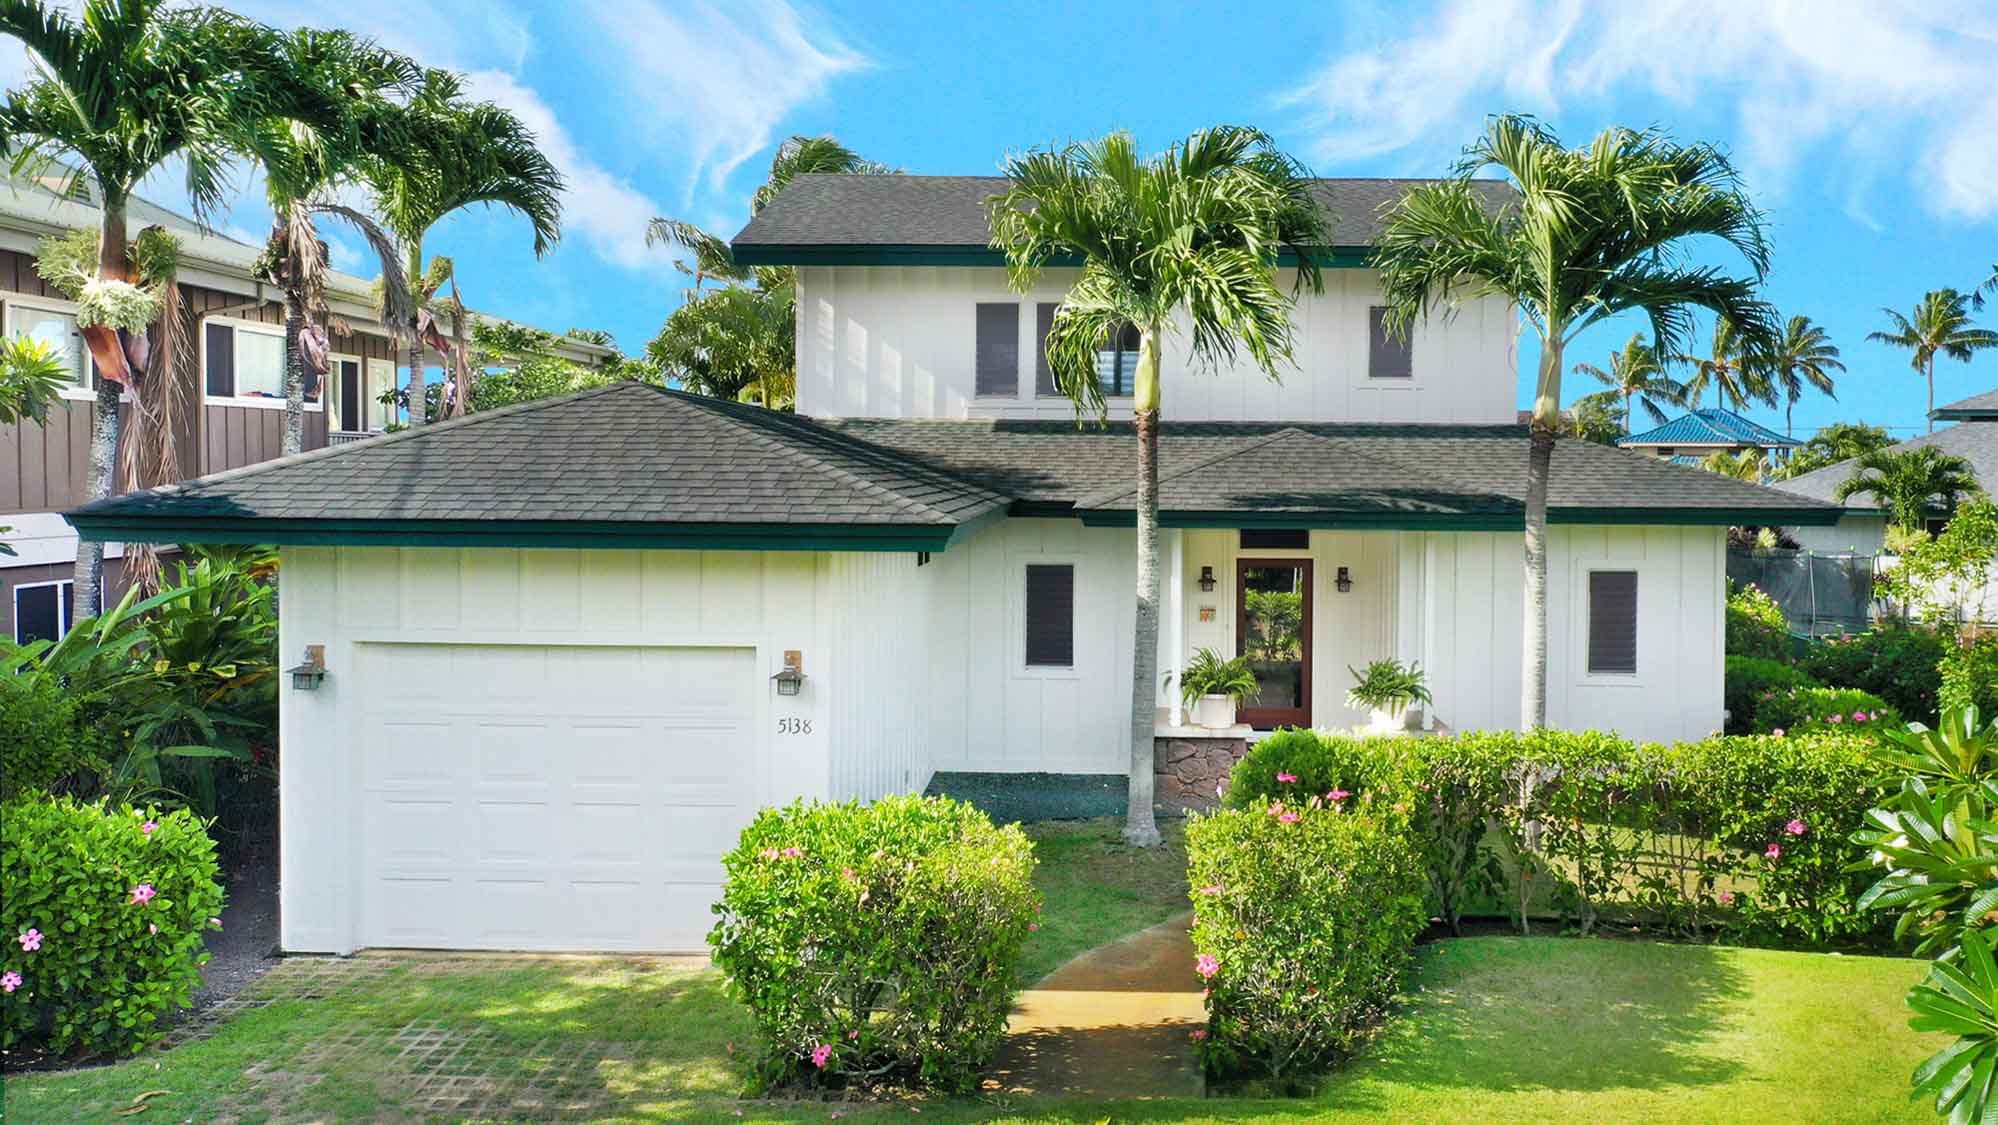 Akala Pua Cottage - Exterior & Entry - Parrish Kauai